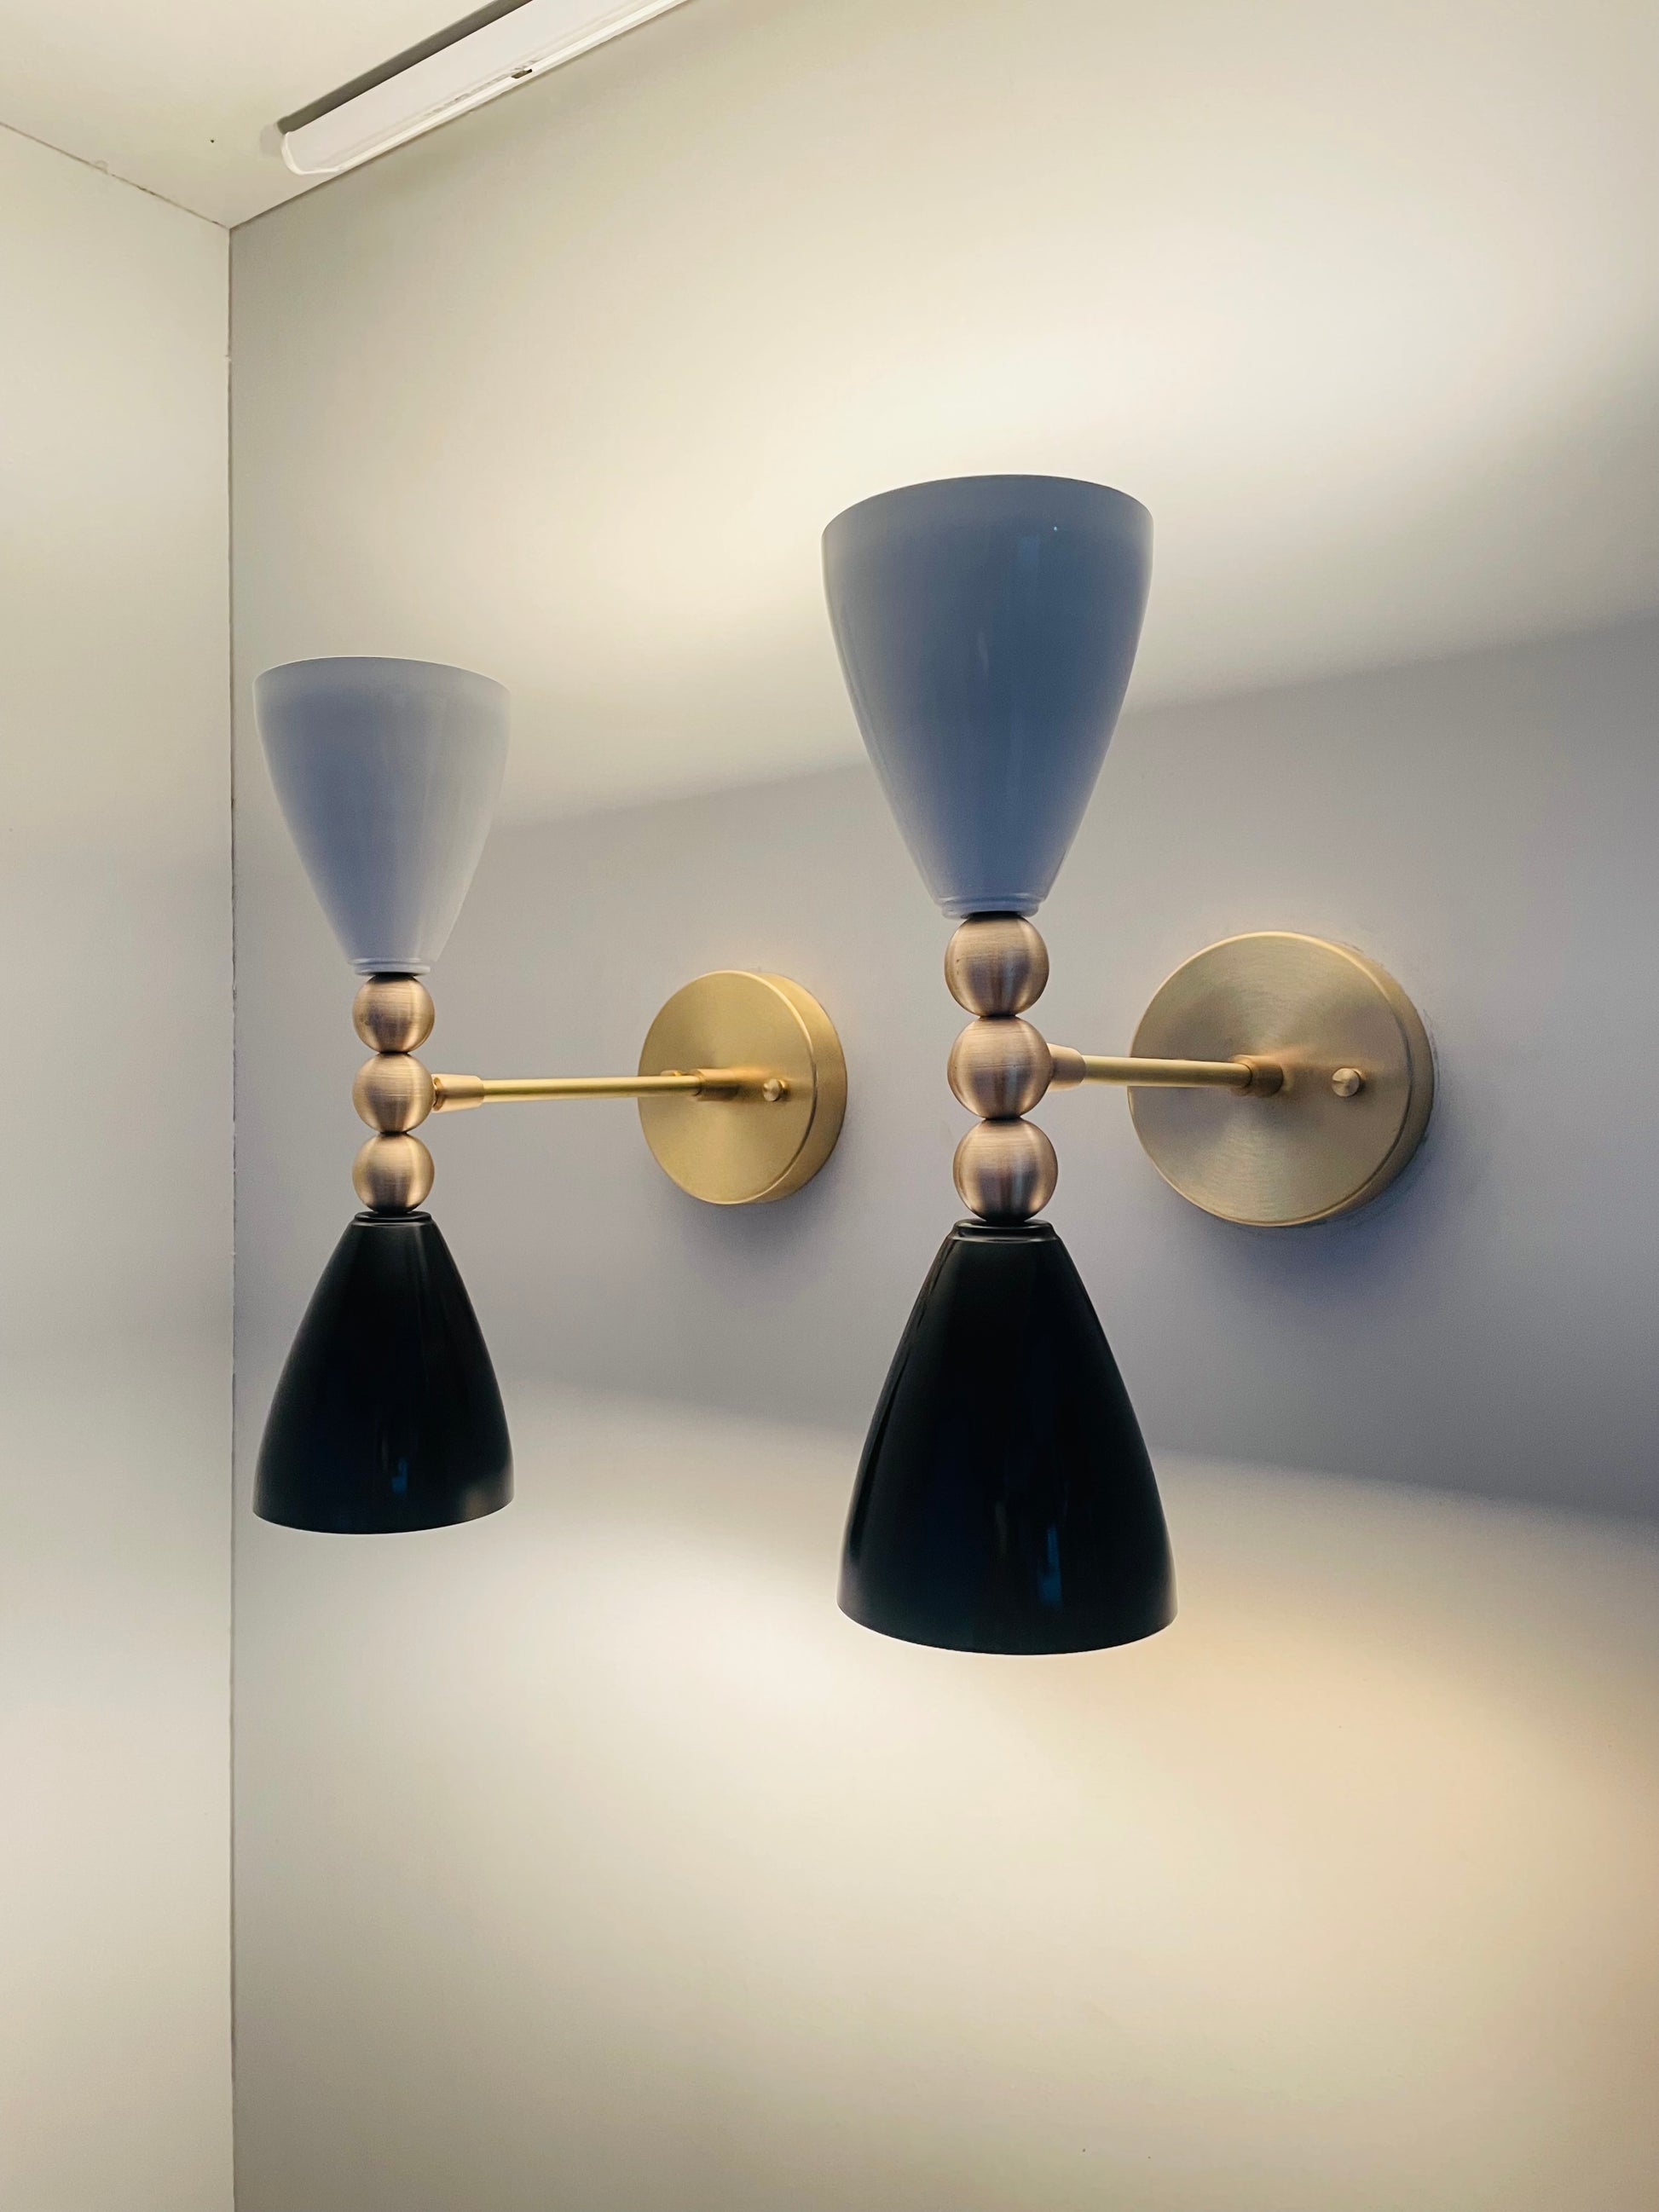 Elegant Wall Light Fixture - Italian Design - Mid Century Modern